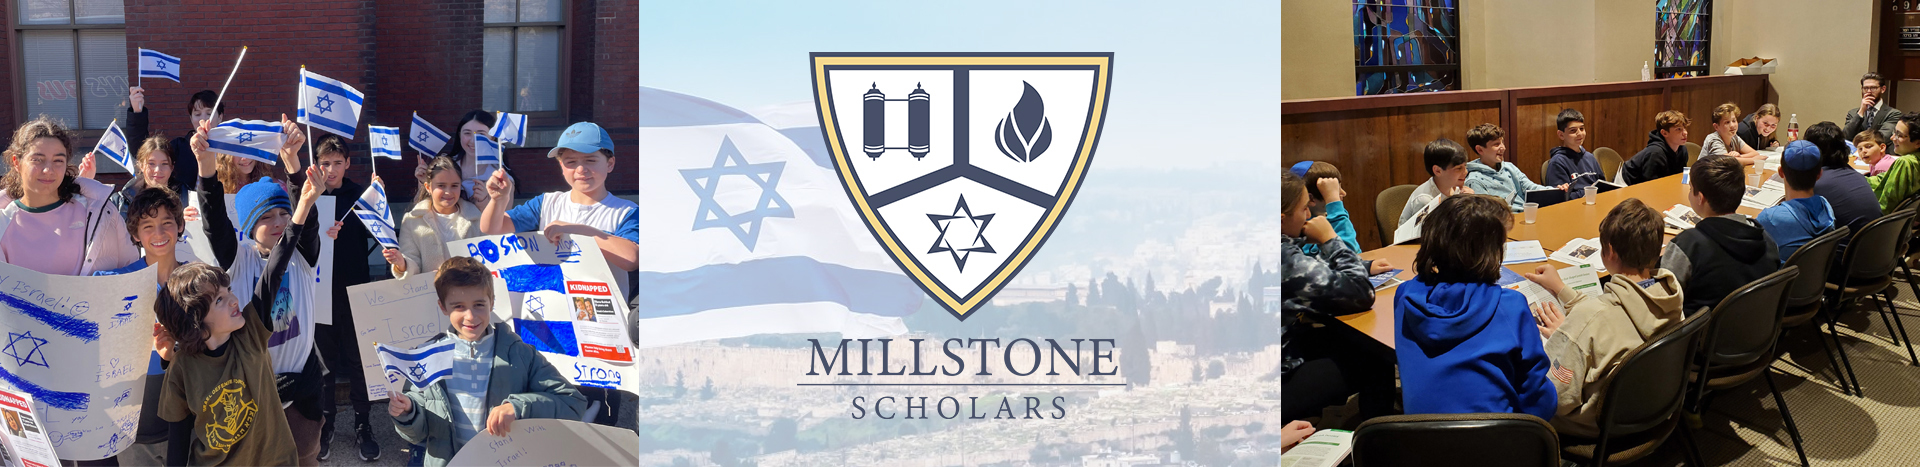 Image for Millstone Scholars